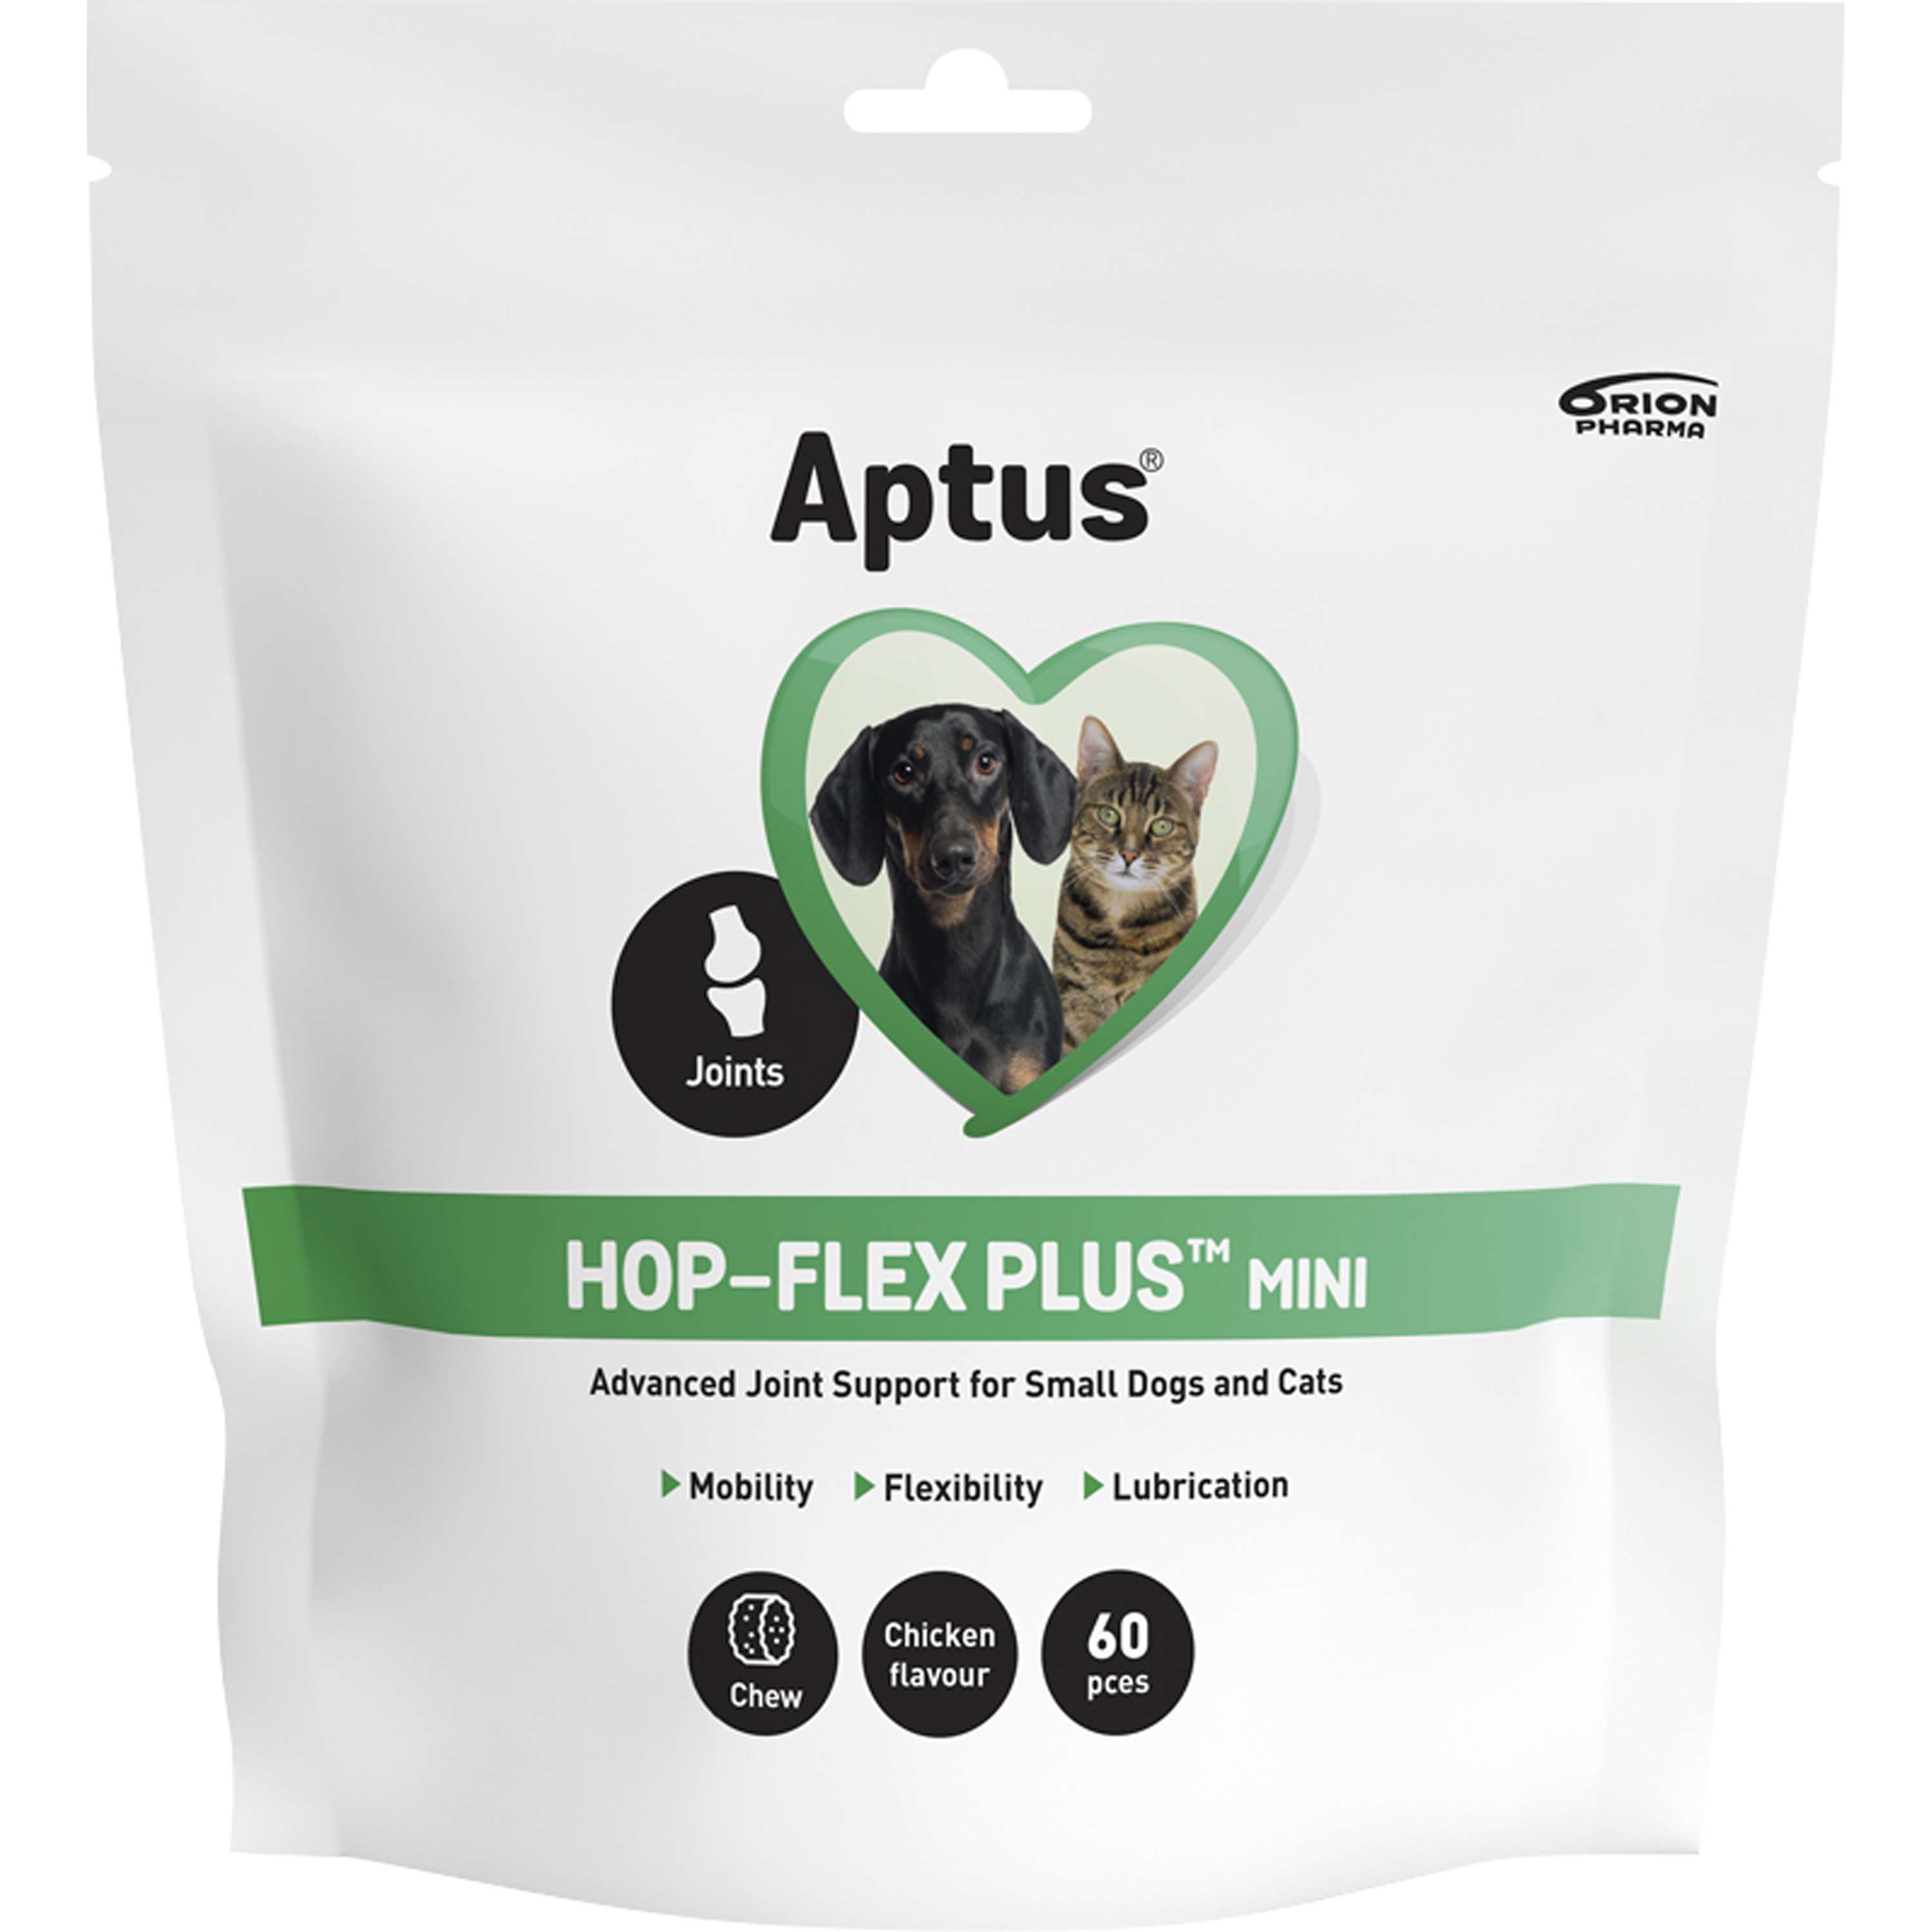 Kosttillskott Aptus Hop-Flex Plus Mini Tuggbitar 60p